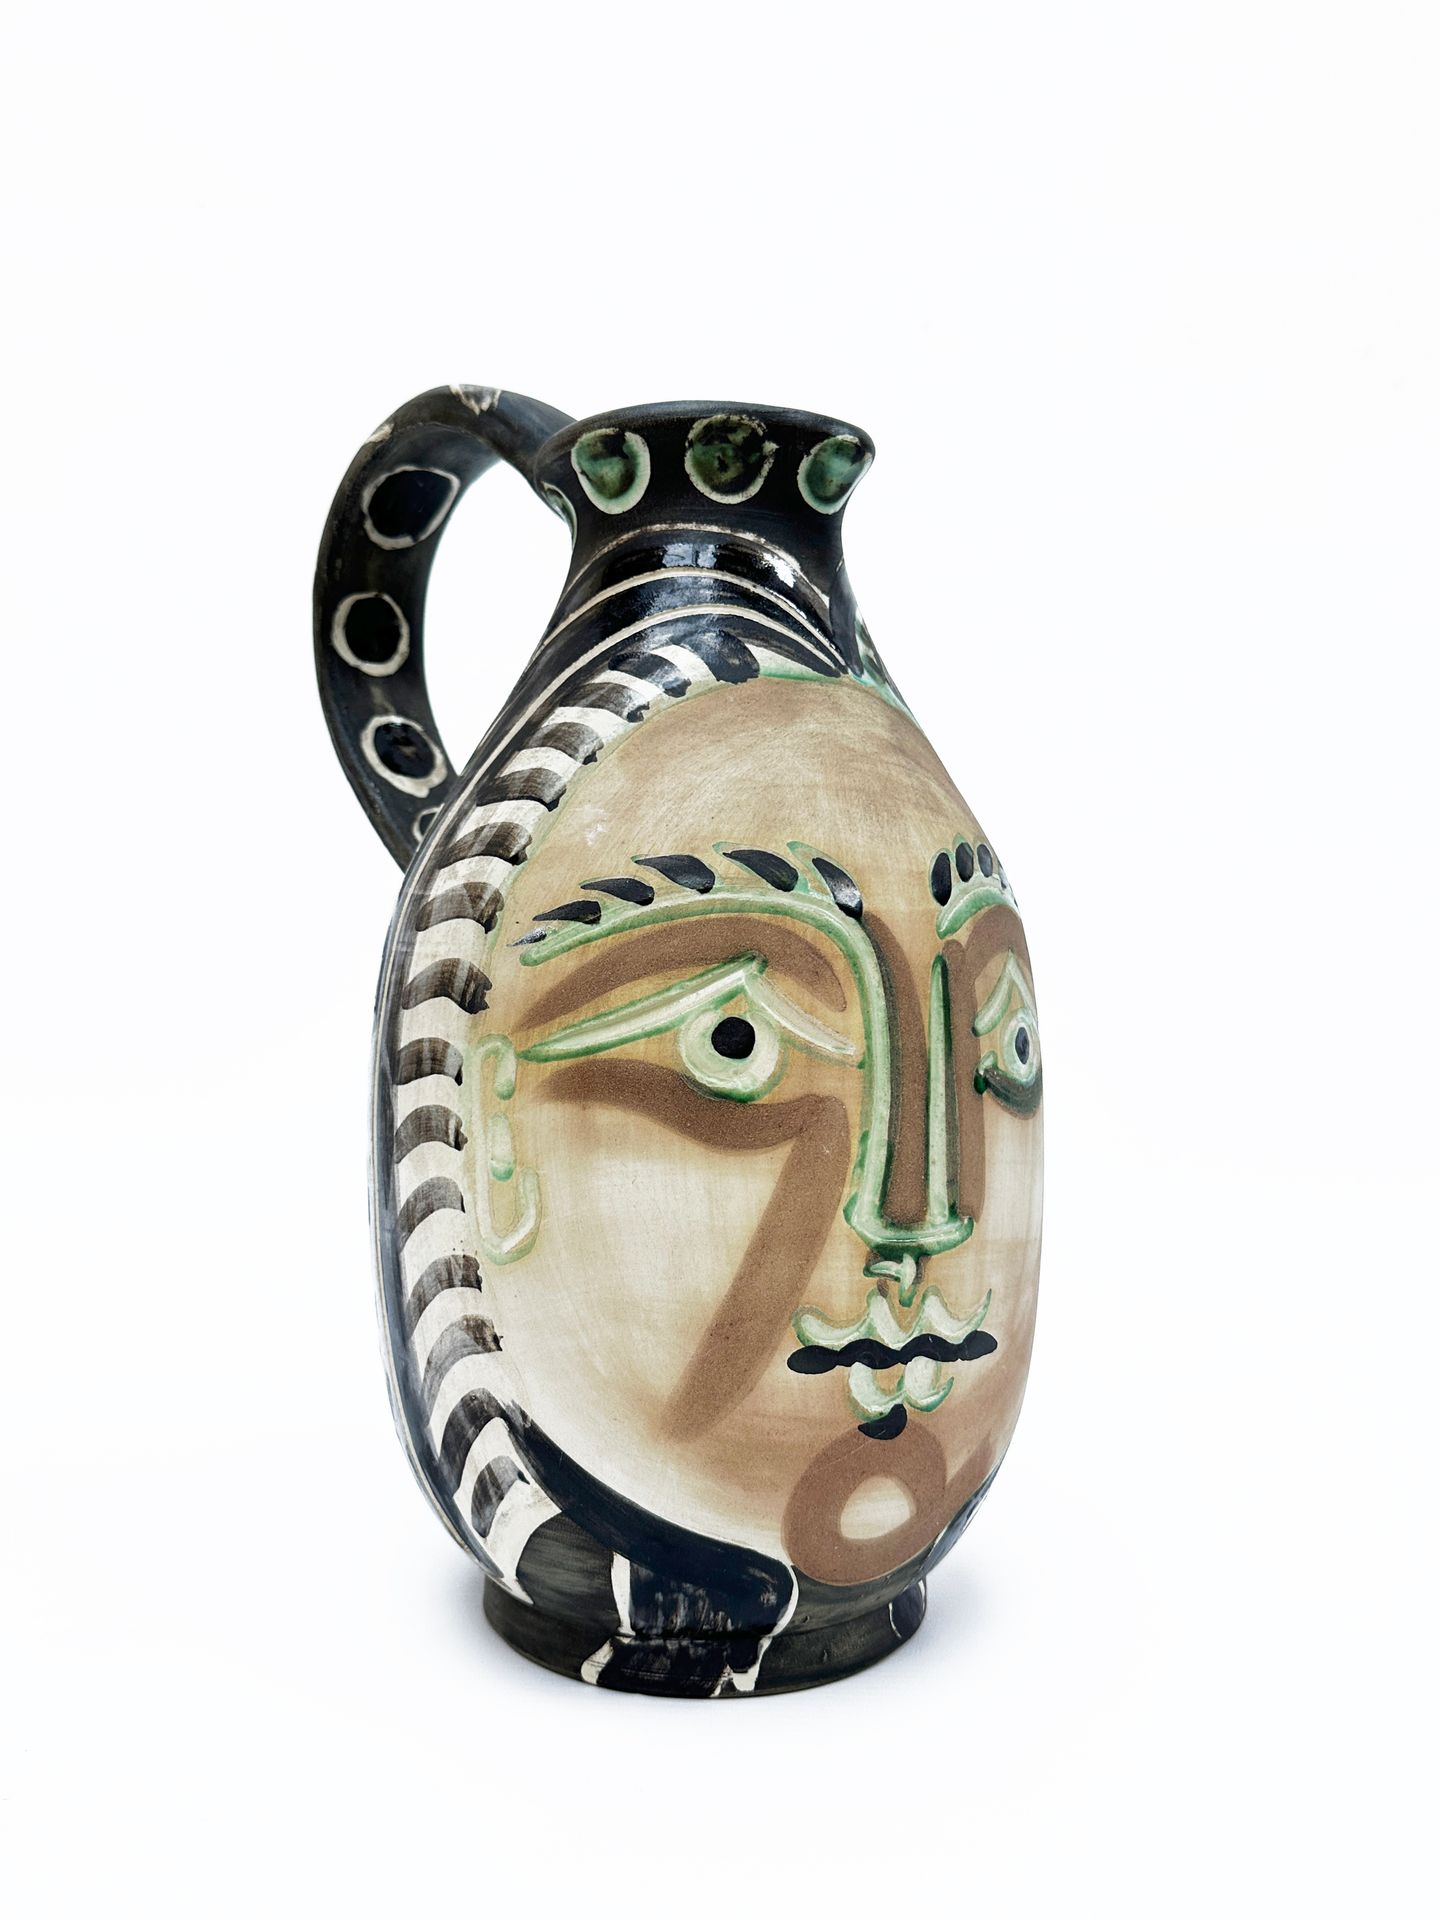 Null 皮卡索-巴勃罗（1881-1973 年） 马杜拉（陶瓷艺术家、出版商）
	车削壶 "Femme du barbu"，模型创作于 1953 年 7 月 &hellip;